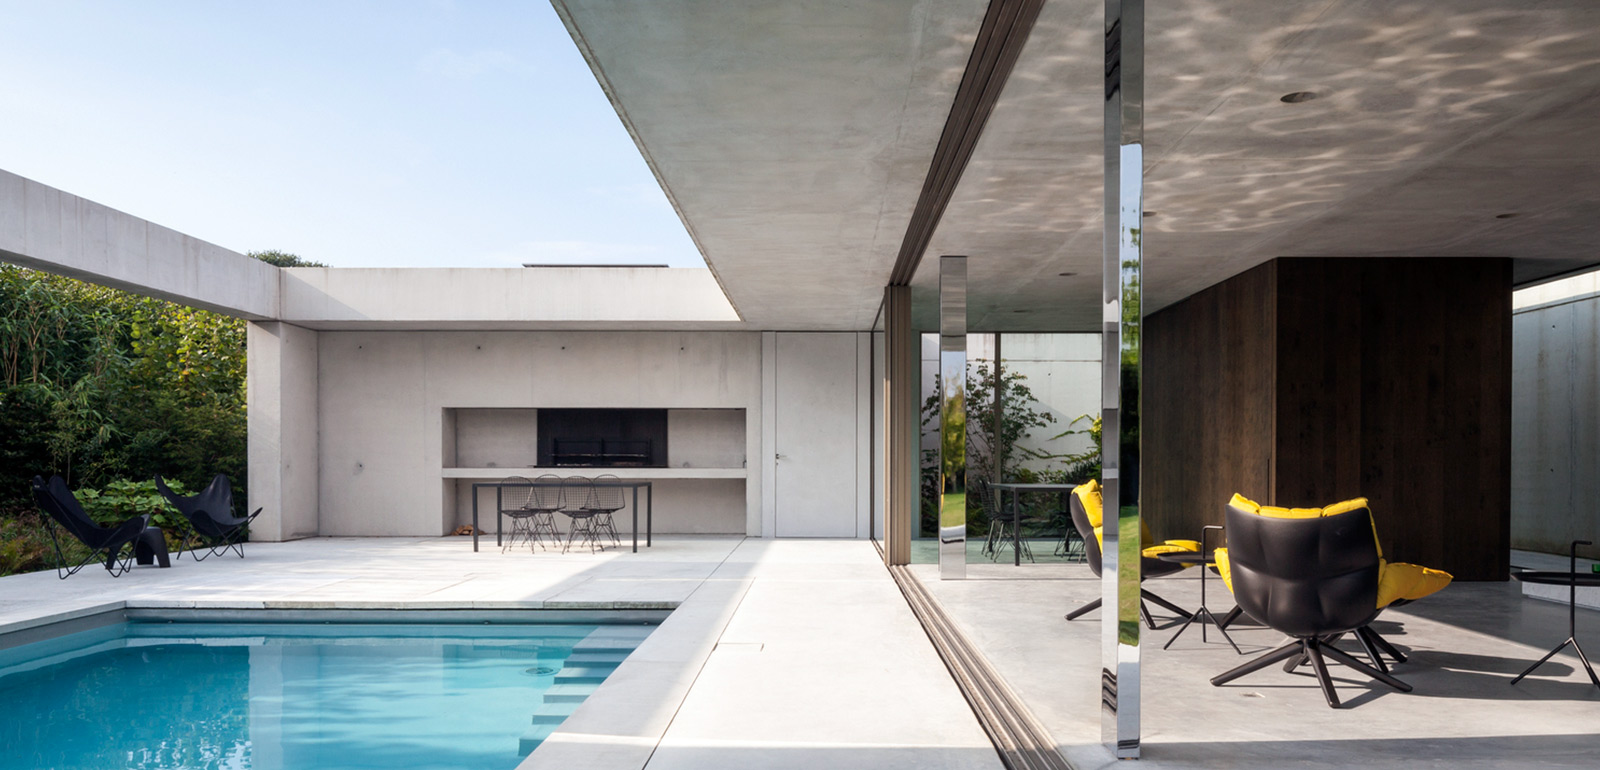 Poolhouse O by Steven Vandenborre Architecten